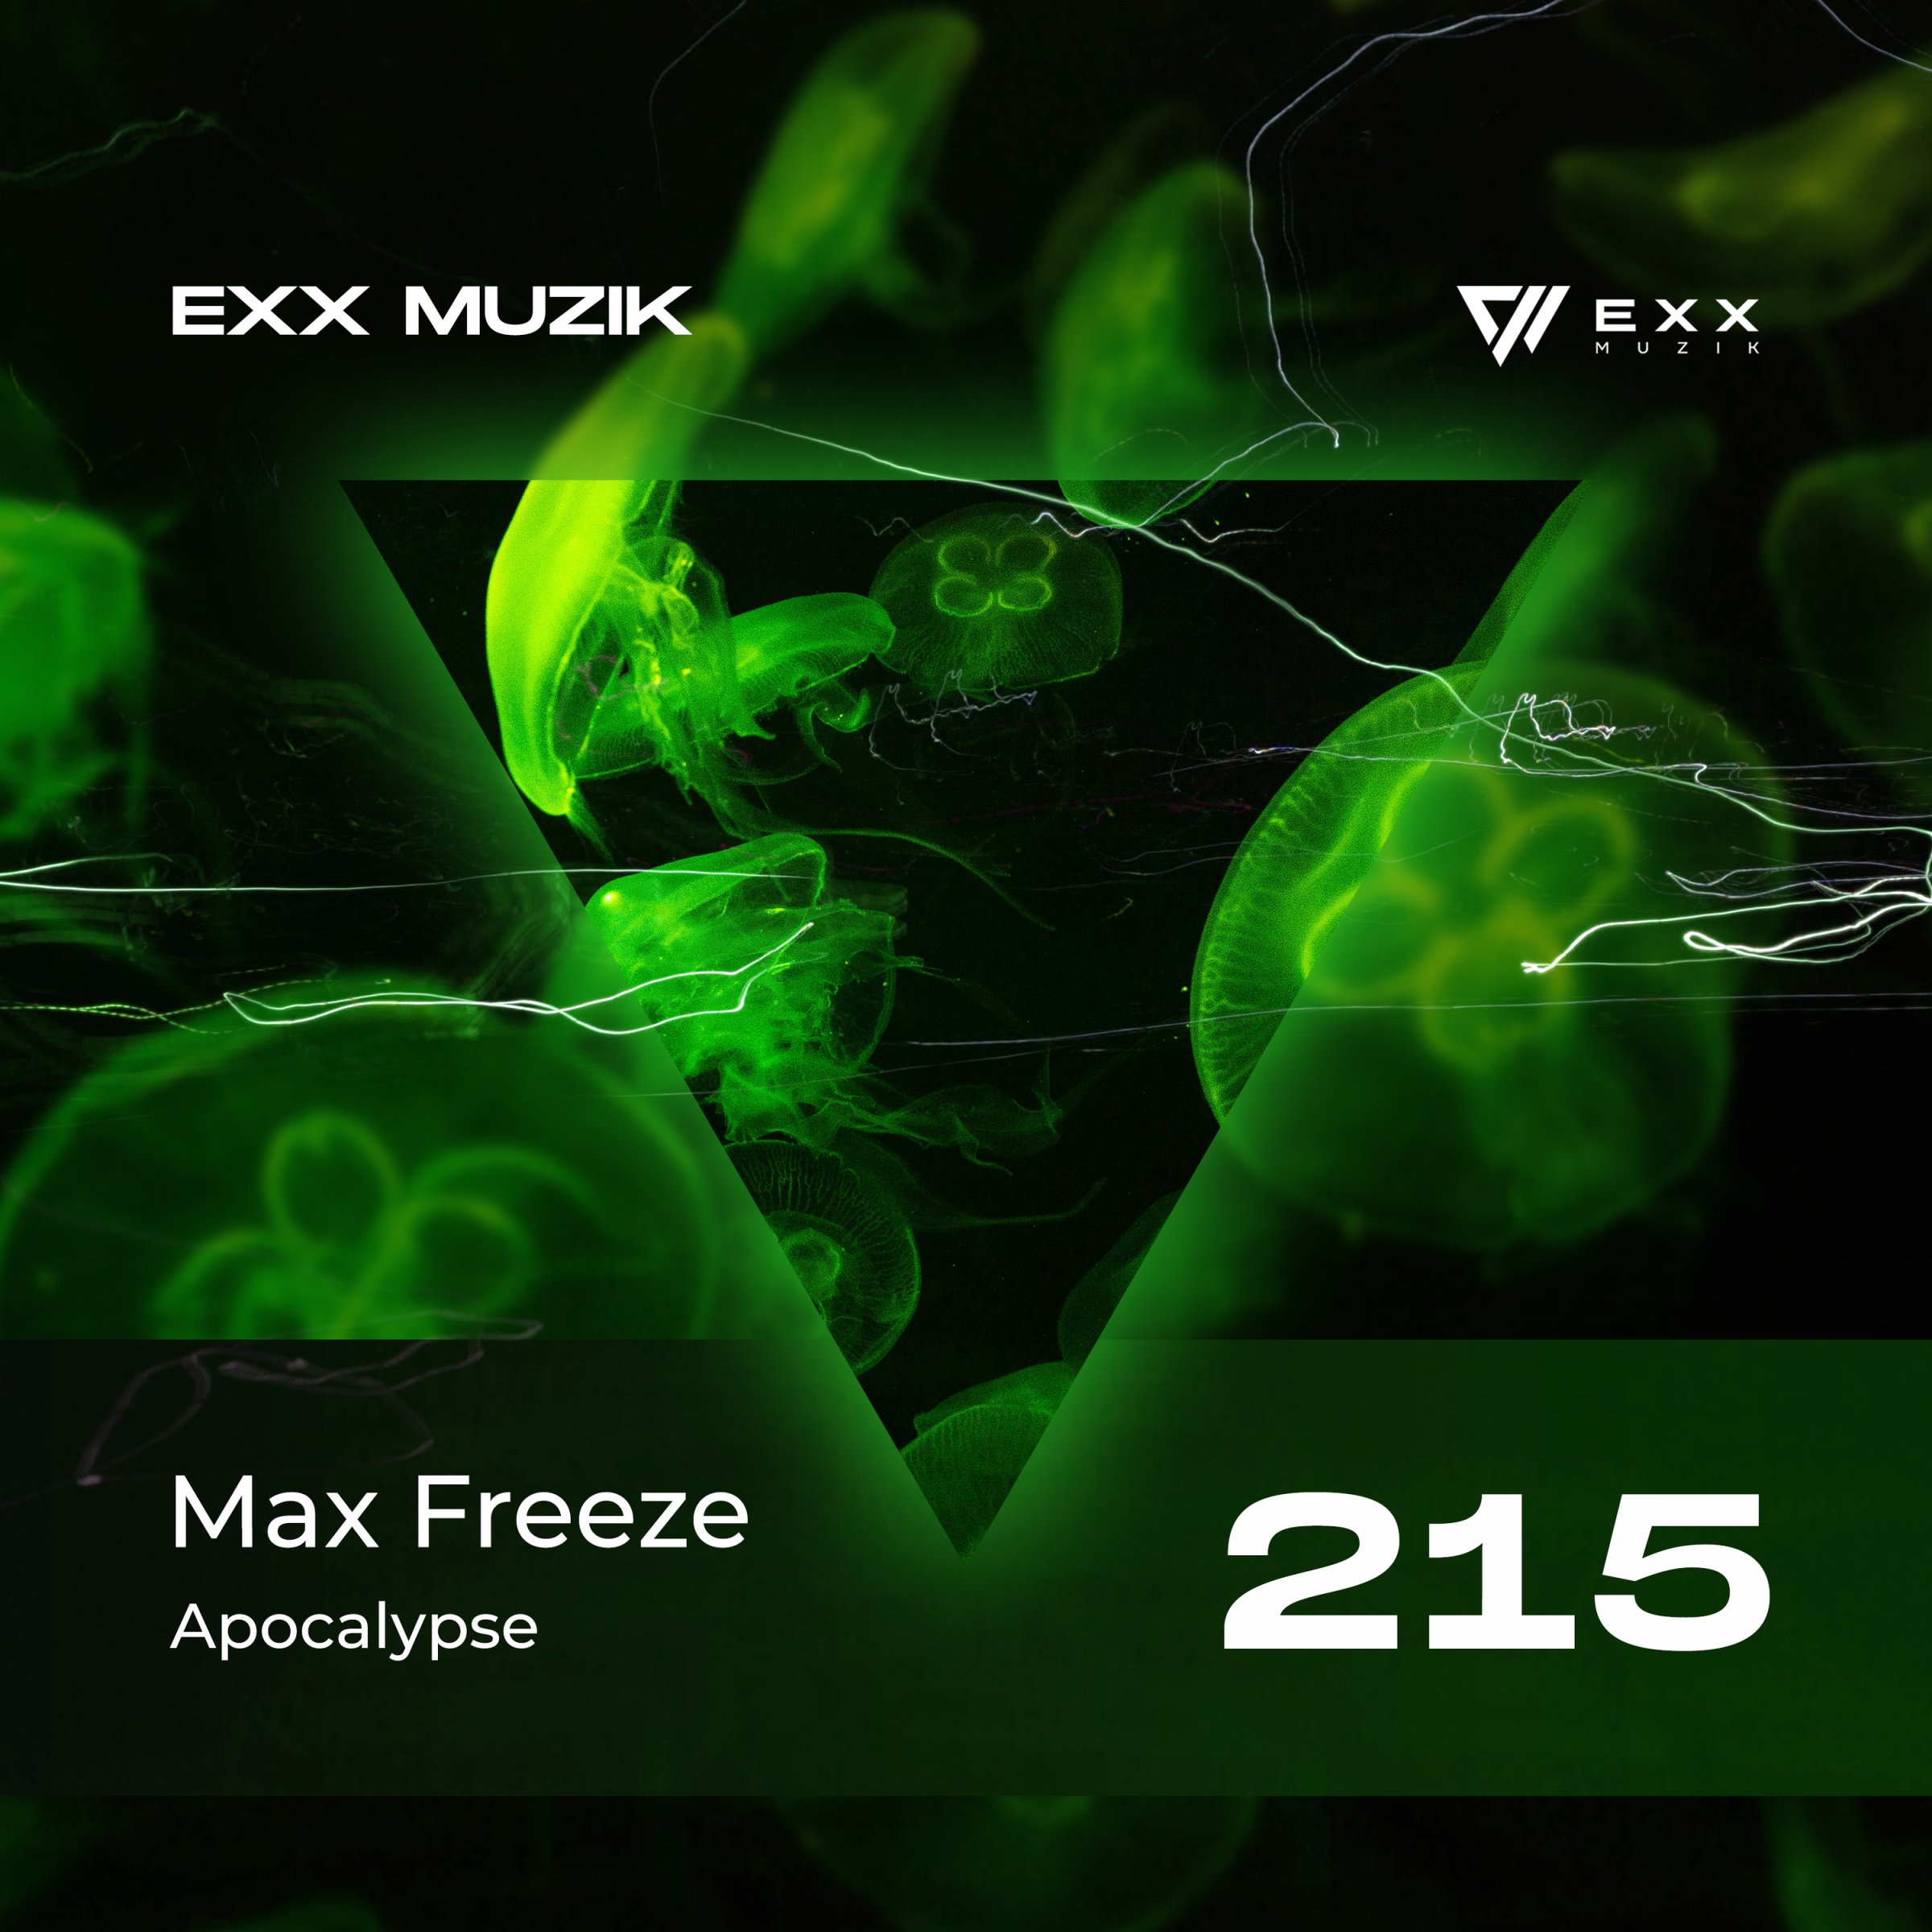 Max freeze. Apocalypse track. Eden Dance in the Apocalypse.